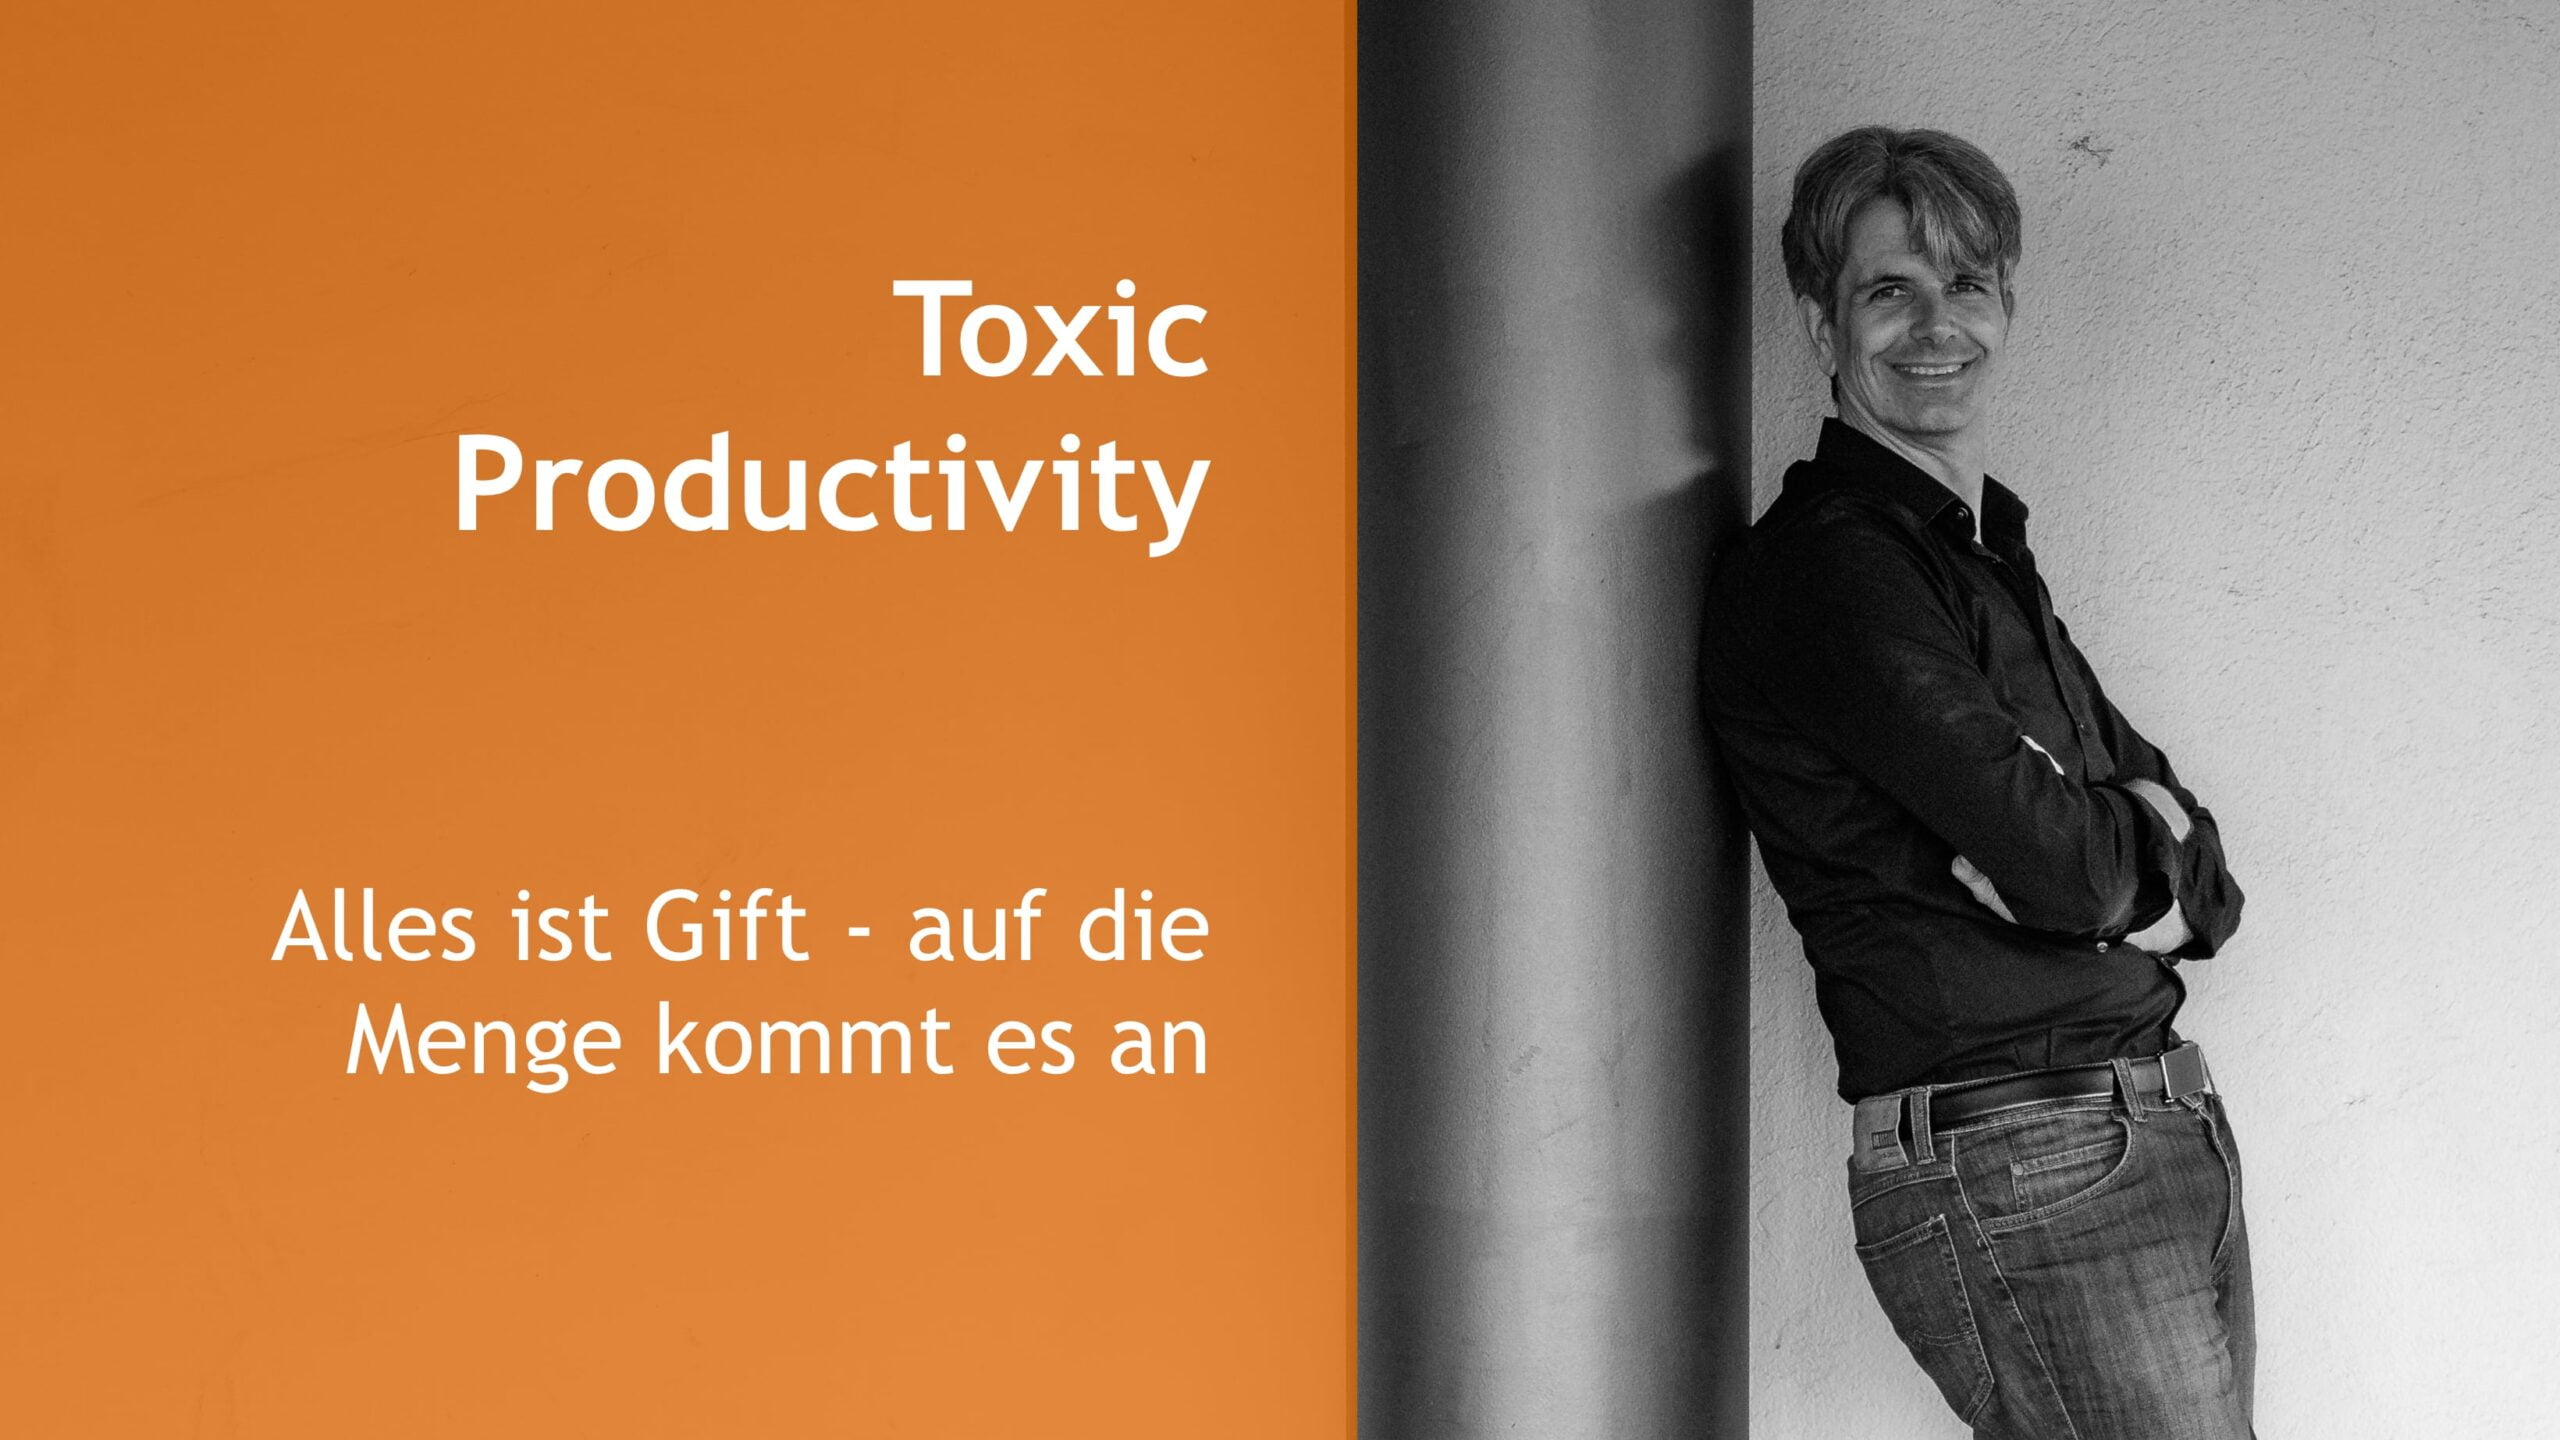 Toxic Productivity: Alles ist Gift - auf die Menge kommt es an